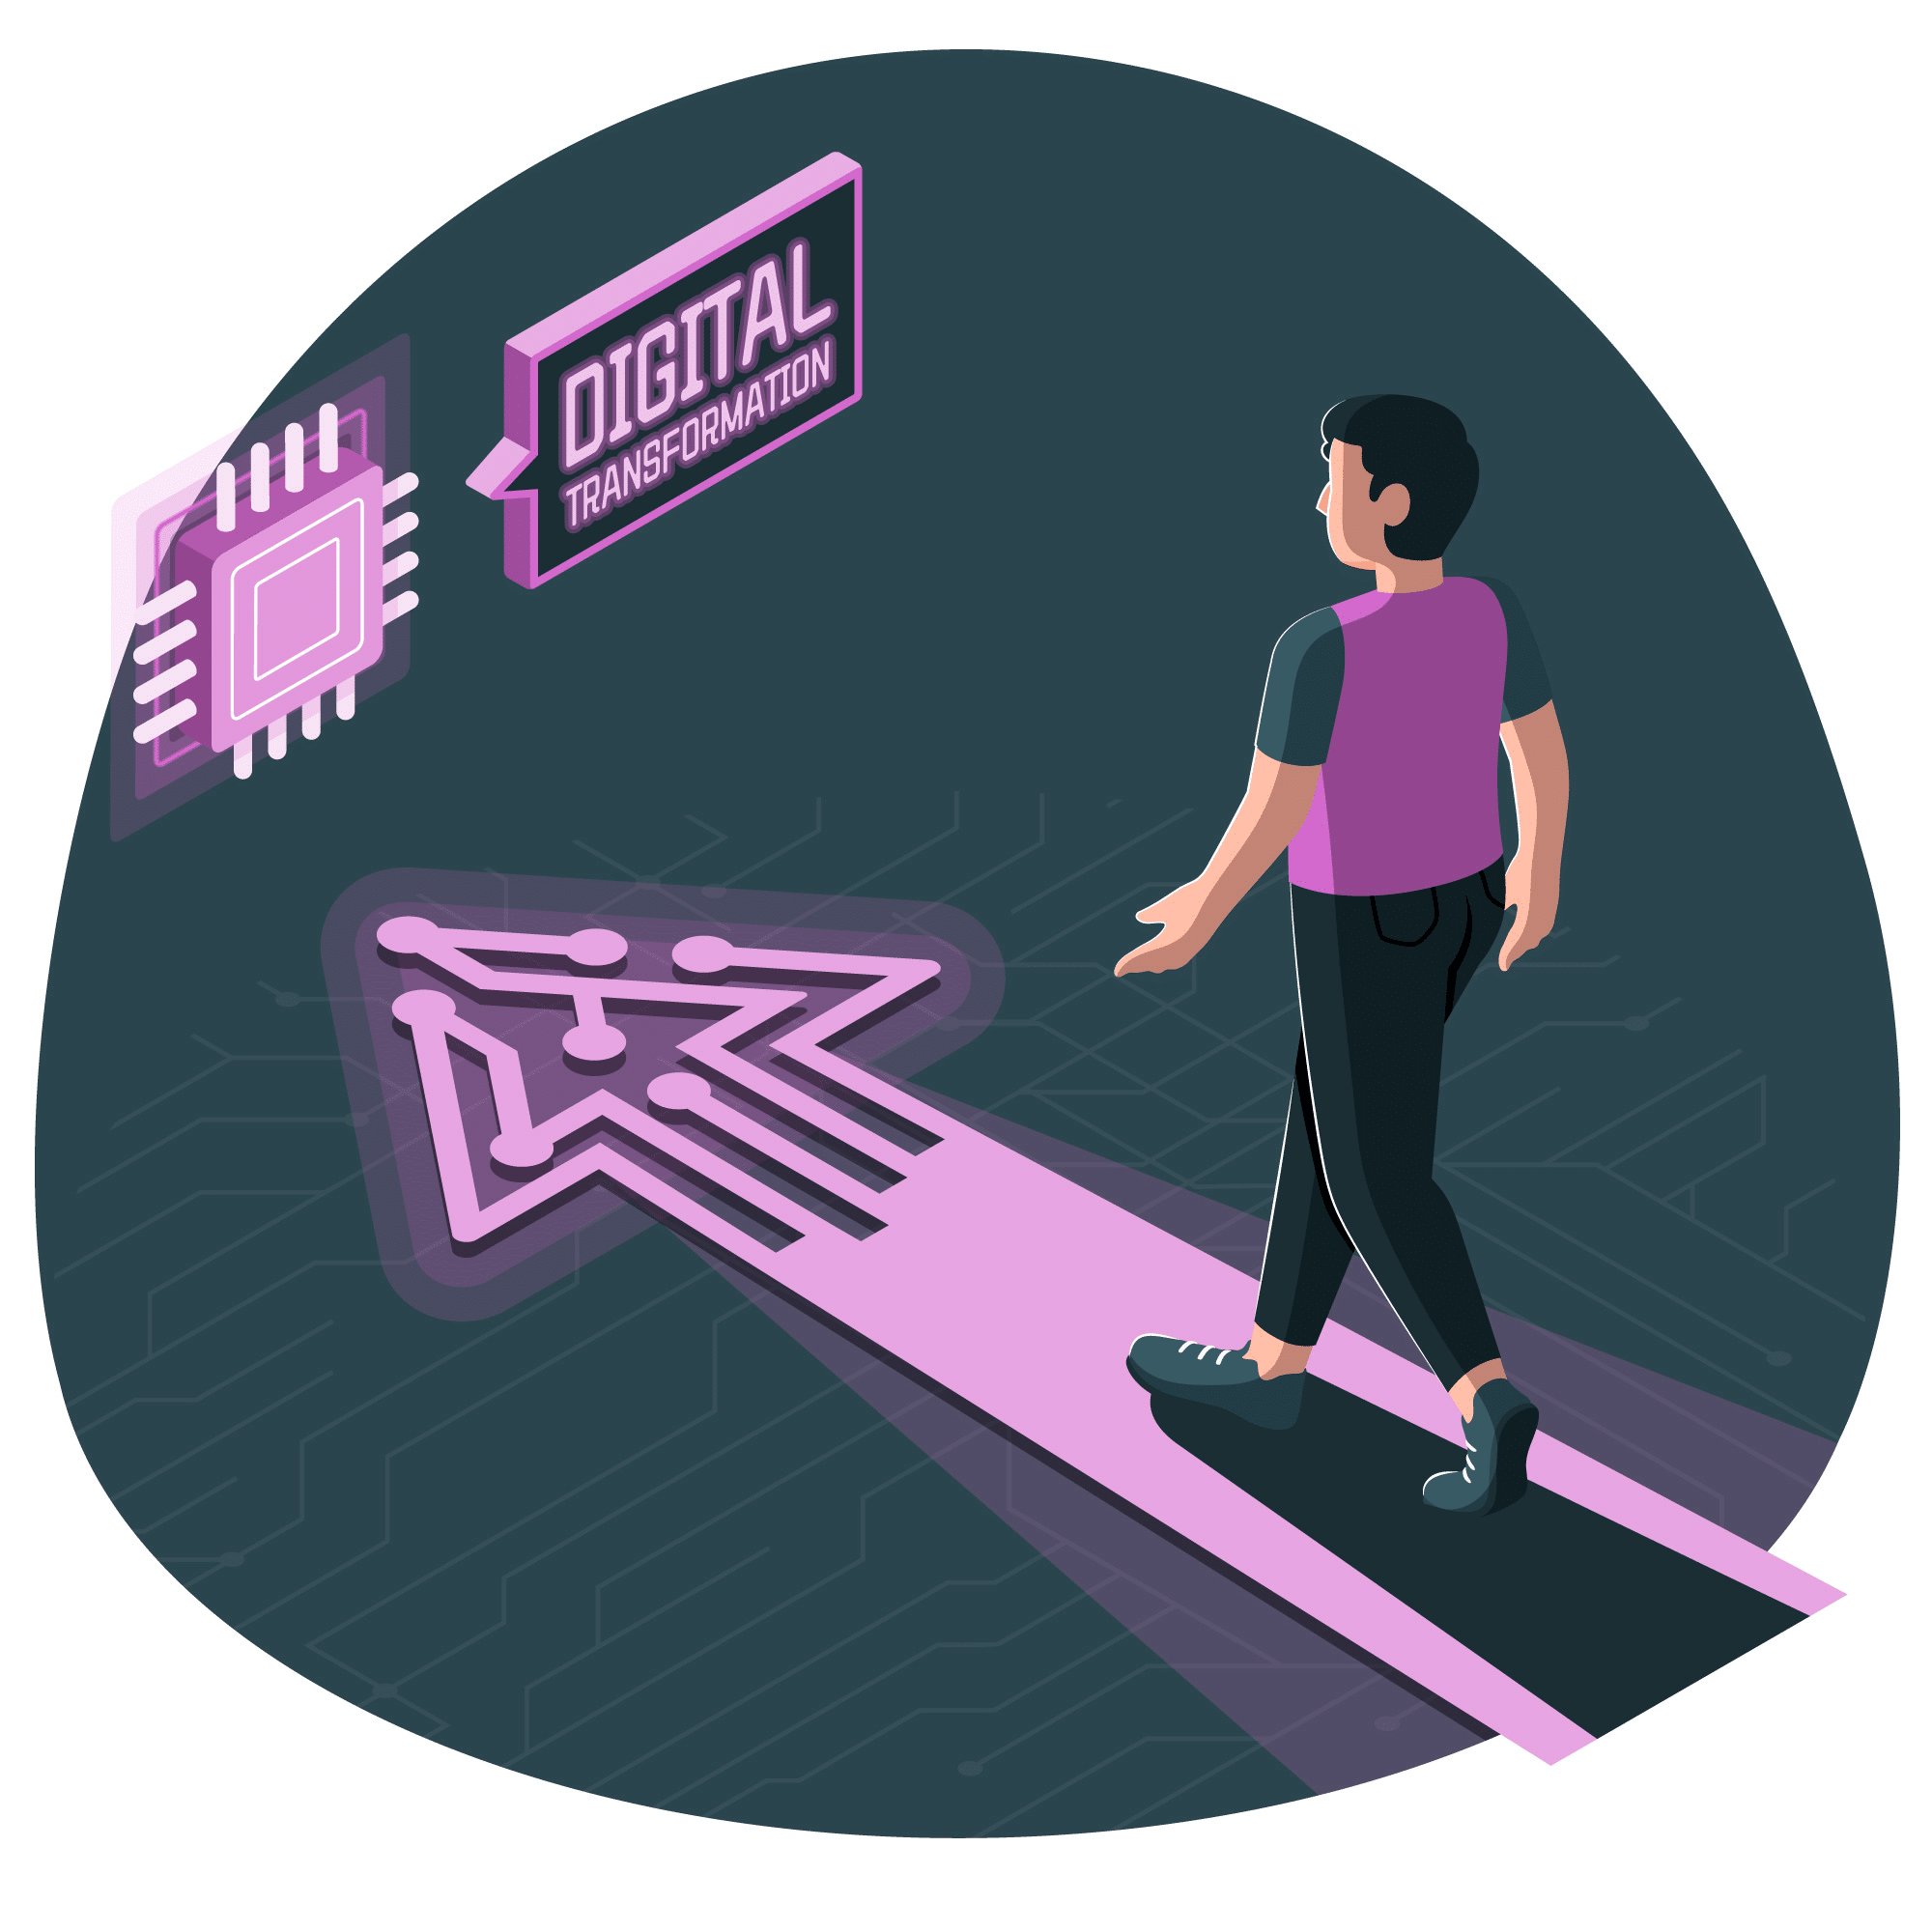 An illustration of a person walking towards digital transformation